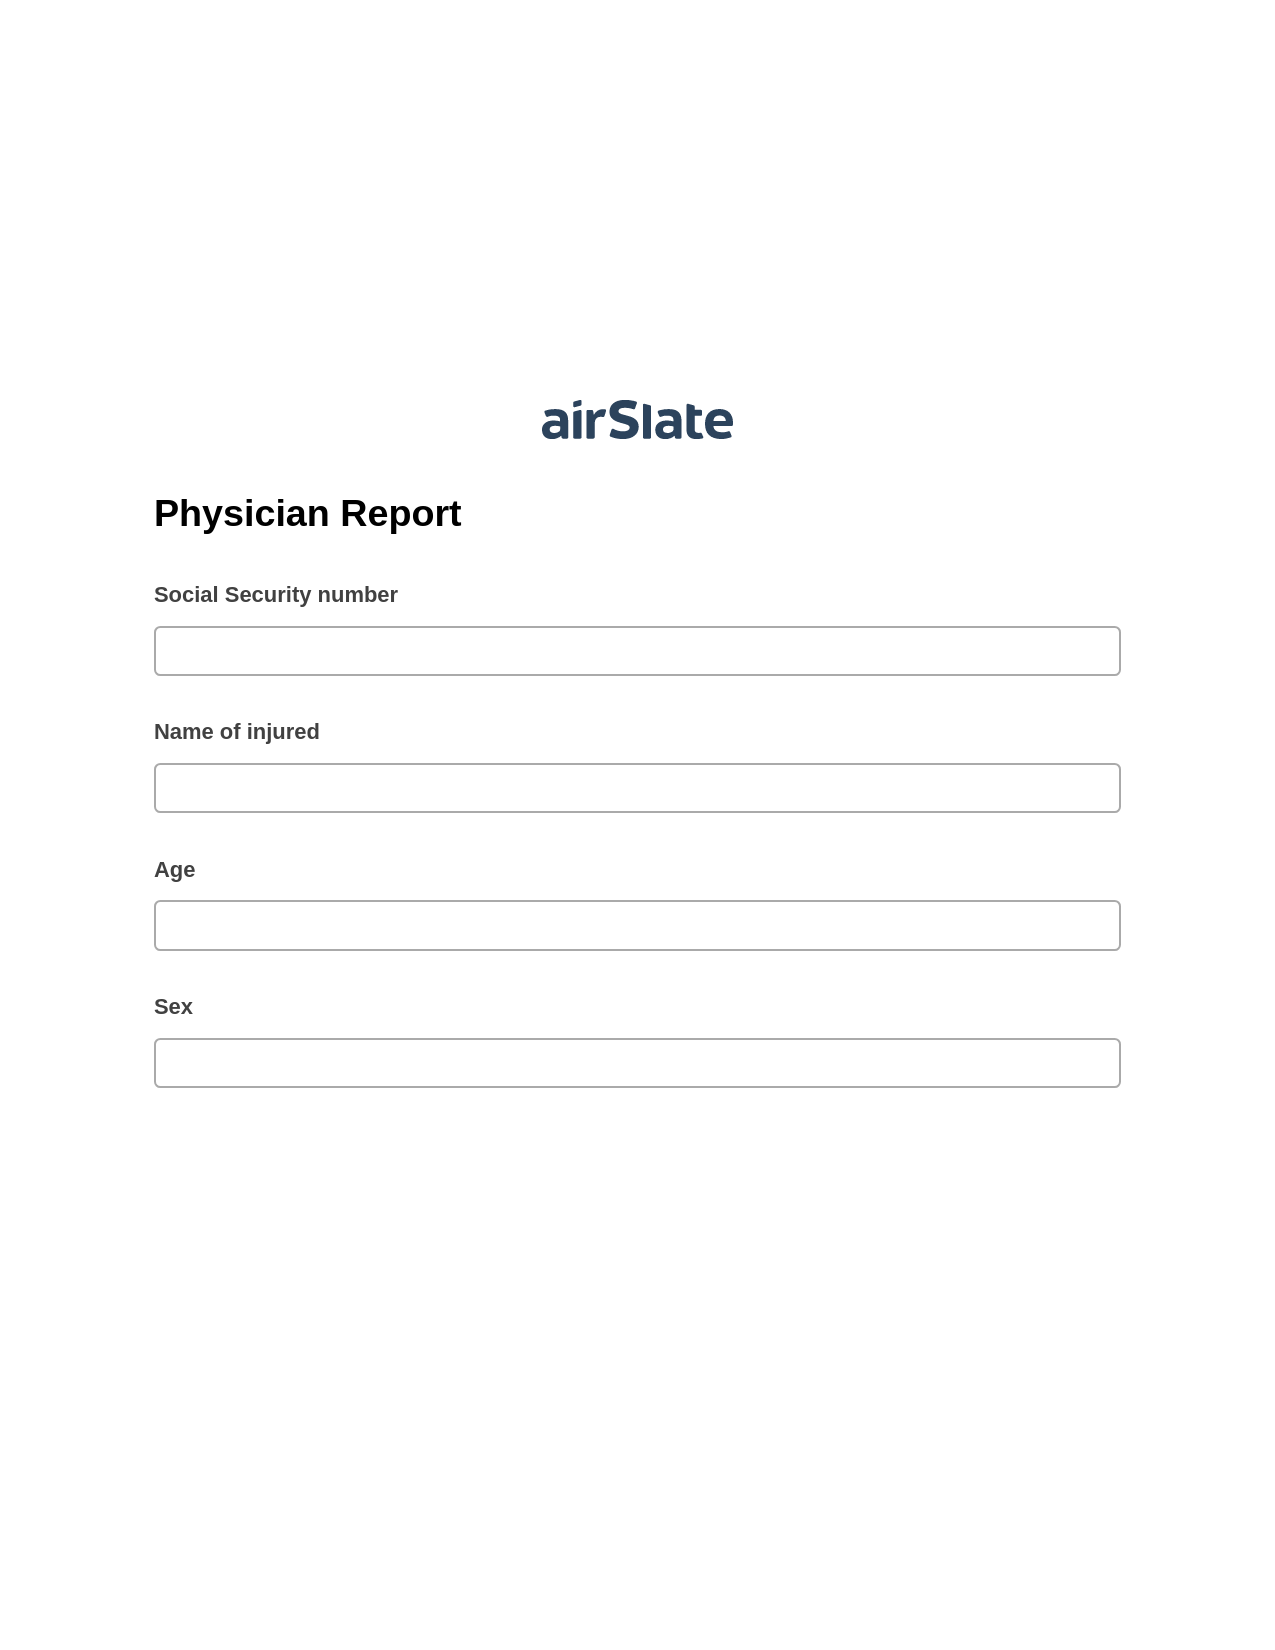 Physician Report Pre-fill Dropdowns from MySQL Bot, Create slate bot, Post-finish Document Bot